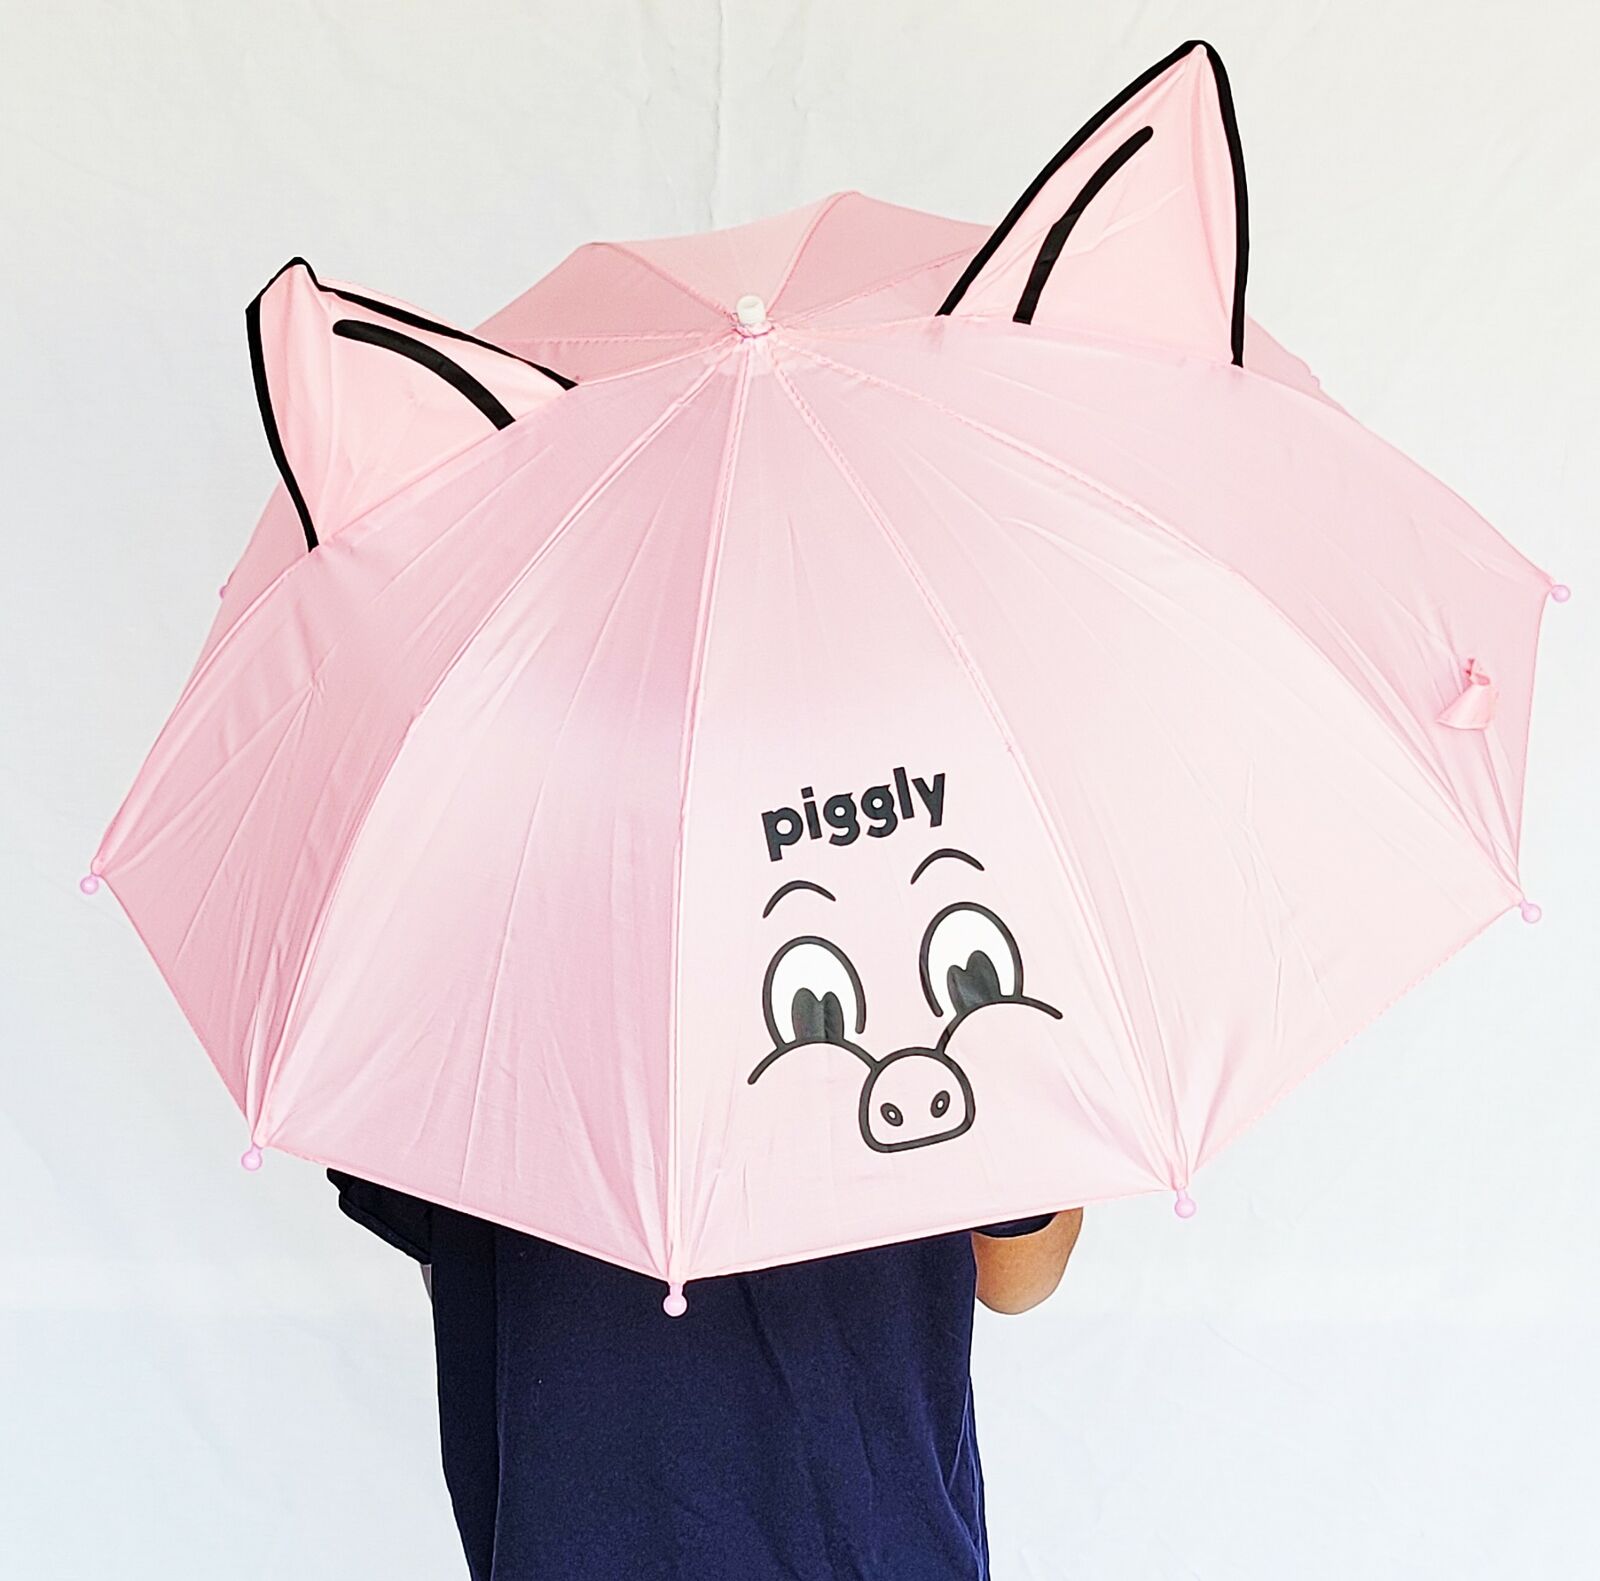 2011 Pink Piggly Wiggly Children's Size (30") Umbrella New